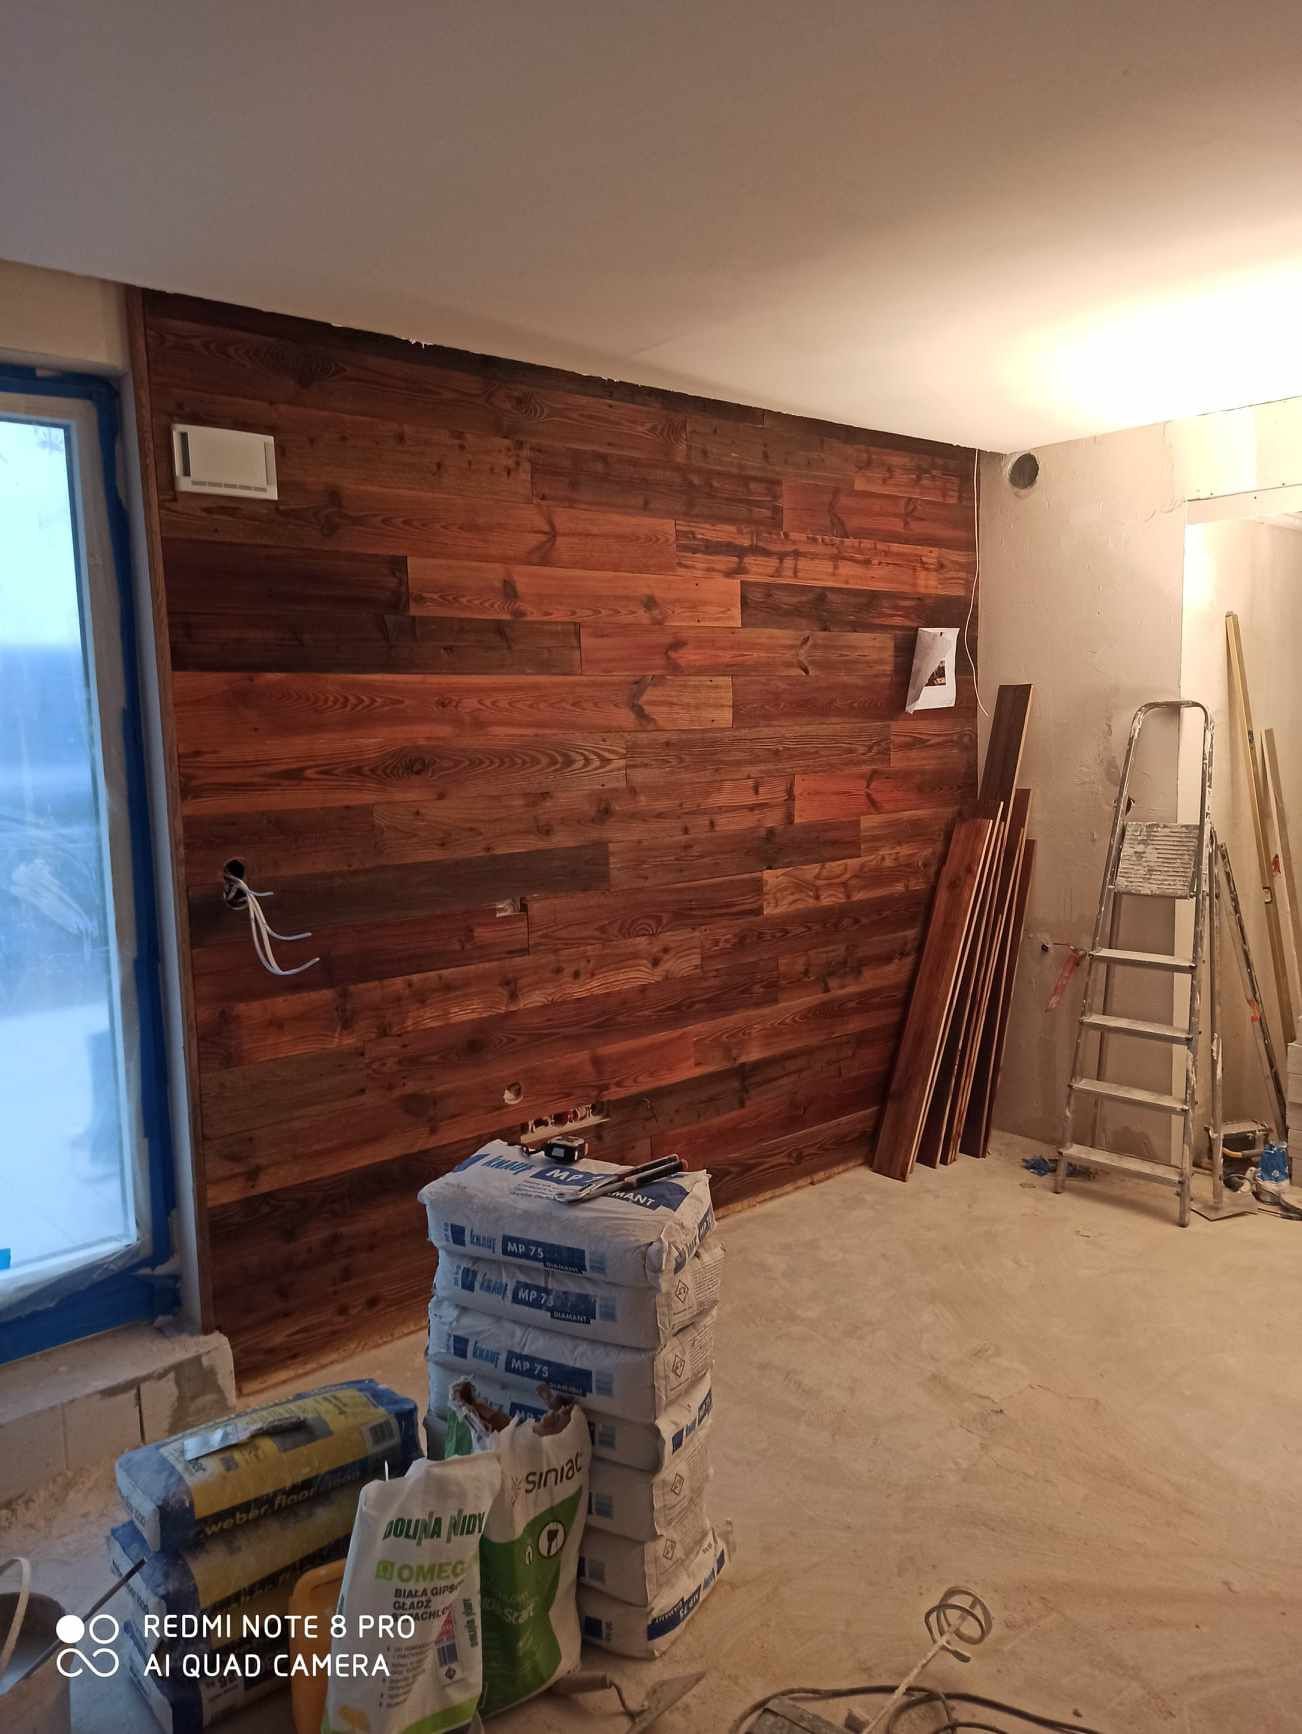 Stare drewno deski rustykalne na ścianę boazeria panel blat